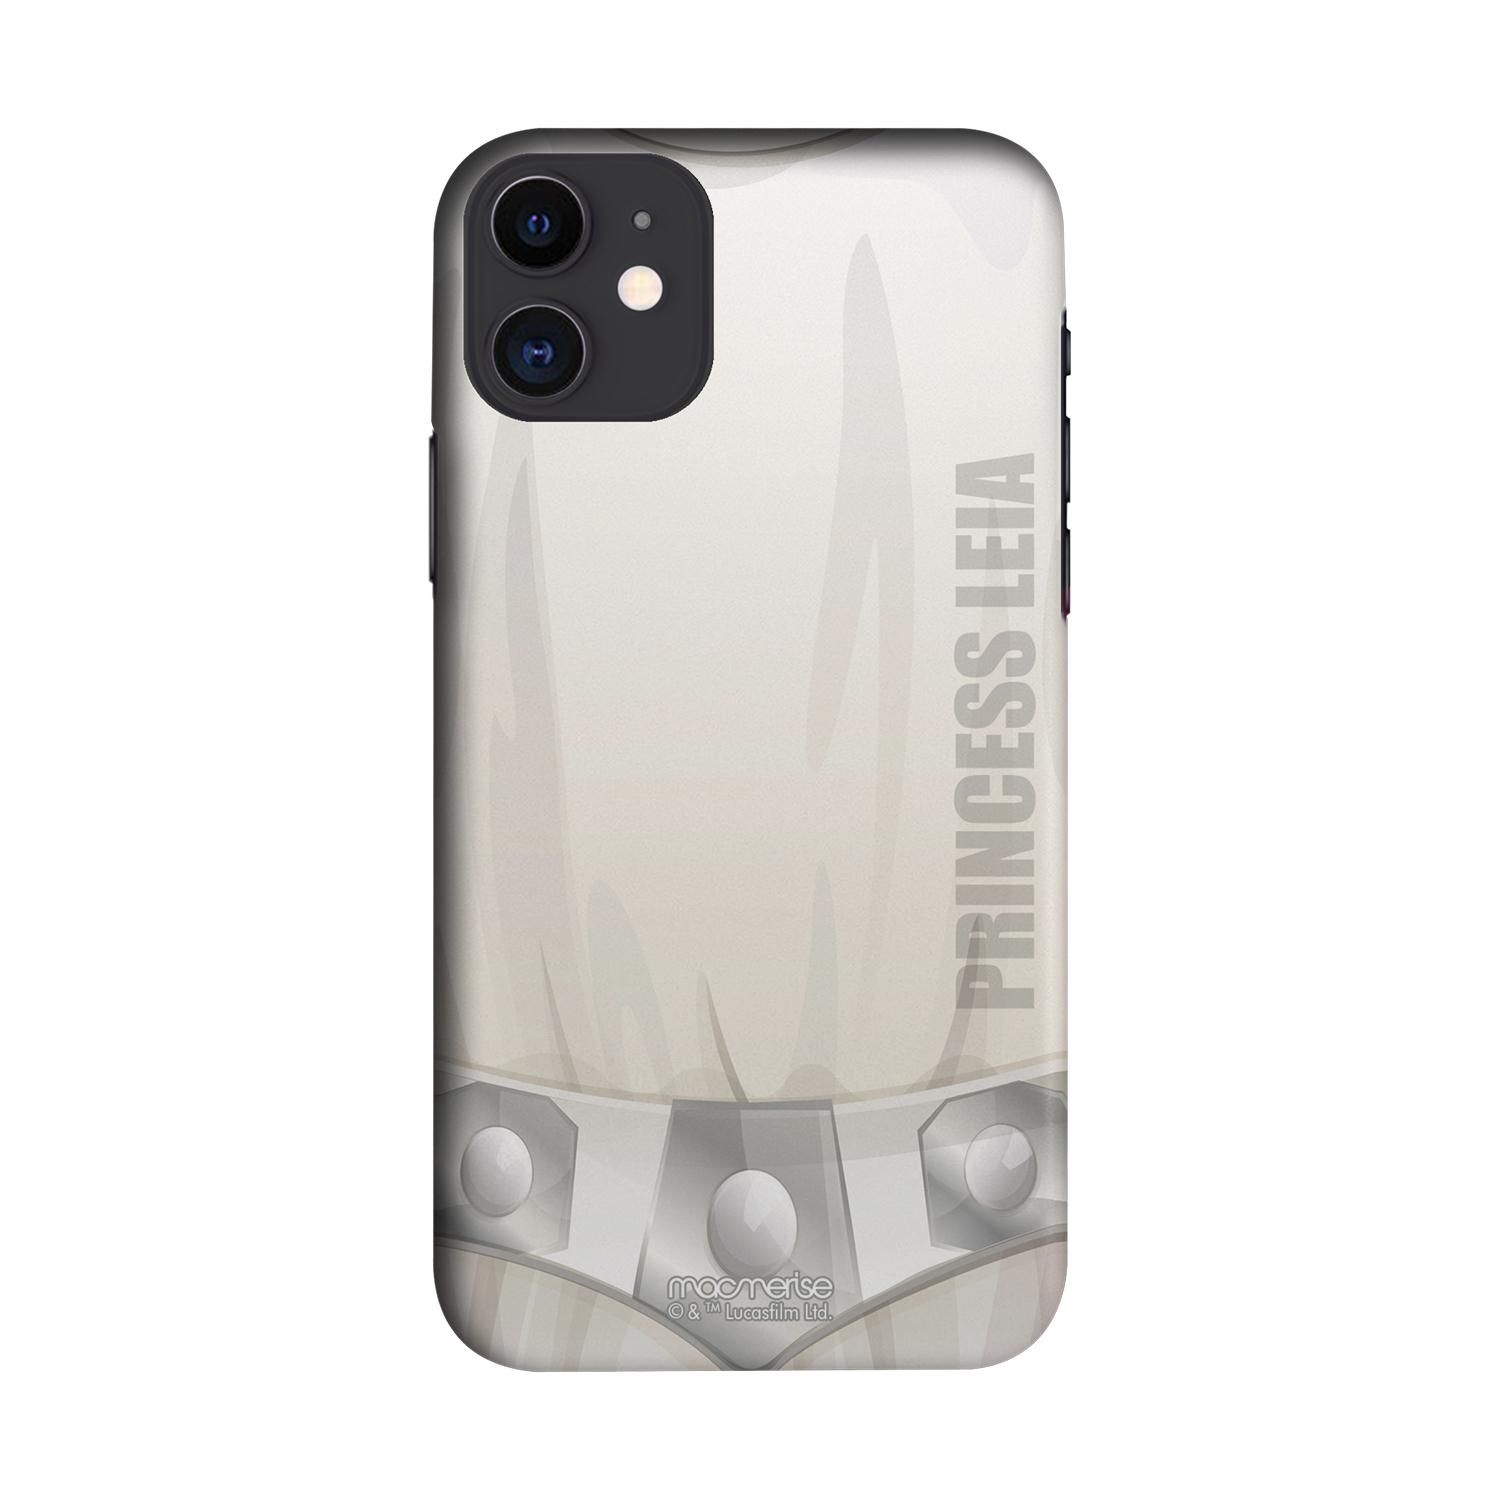 Buy Attire Leia - Sleek Phone Case for iPhone 11 Online